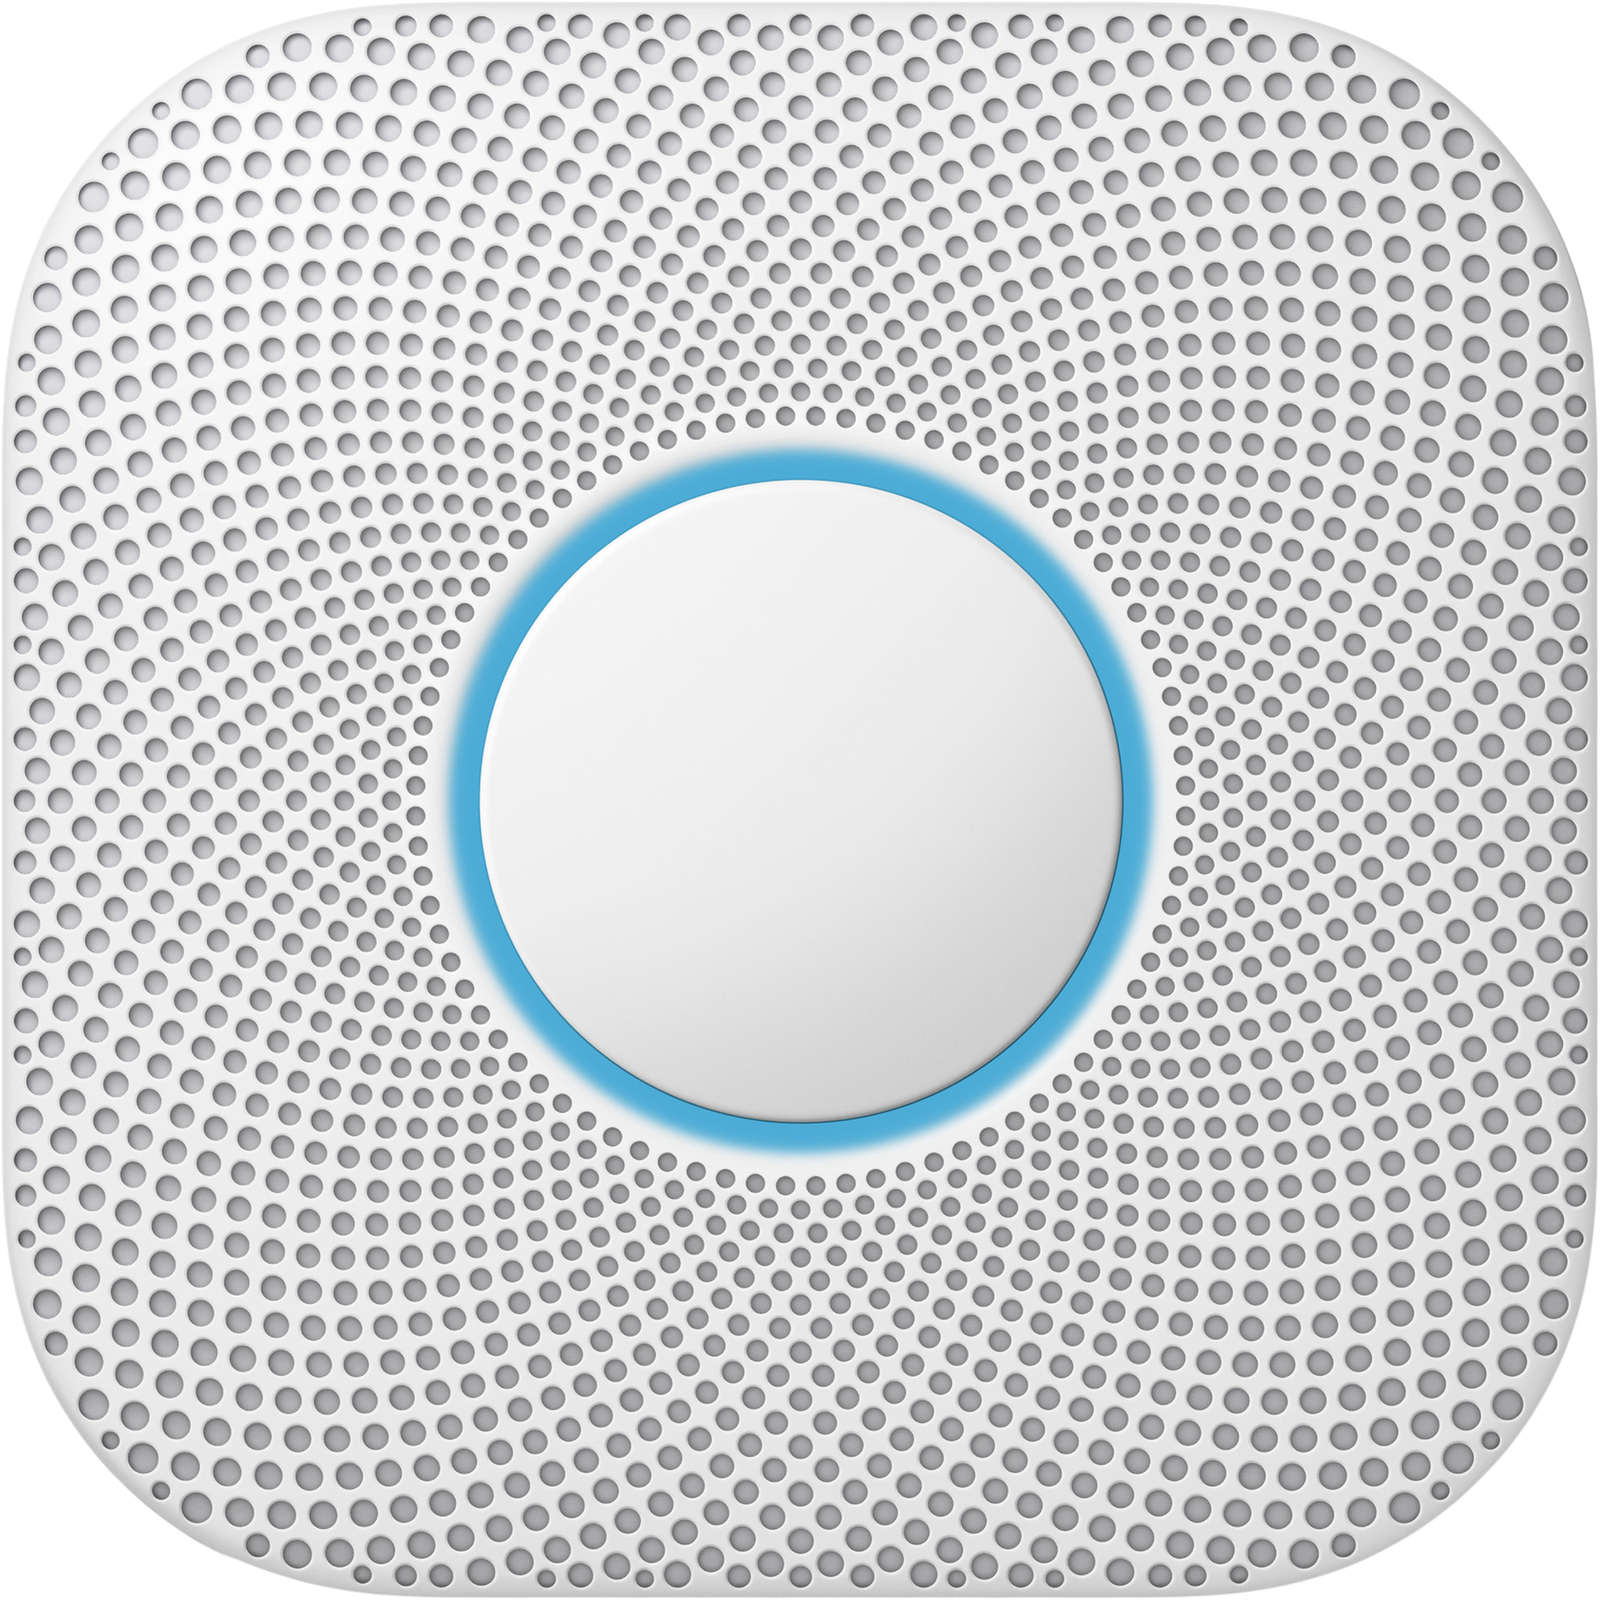 Nest Protect Smoke & Carbon Monoxide Alarm (Battery Version) - $159.99 (plus earn 47,700 points after 20X event)